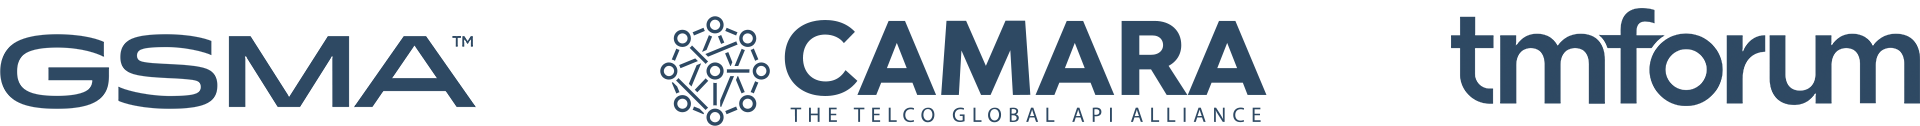 GSMA/TM Forum/Camara - The Telco Global API Alliance